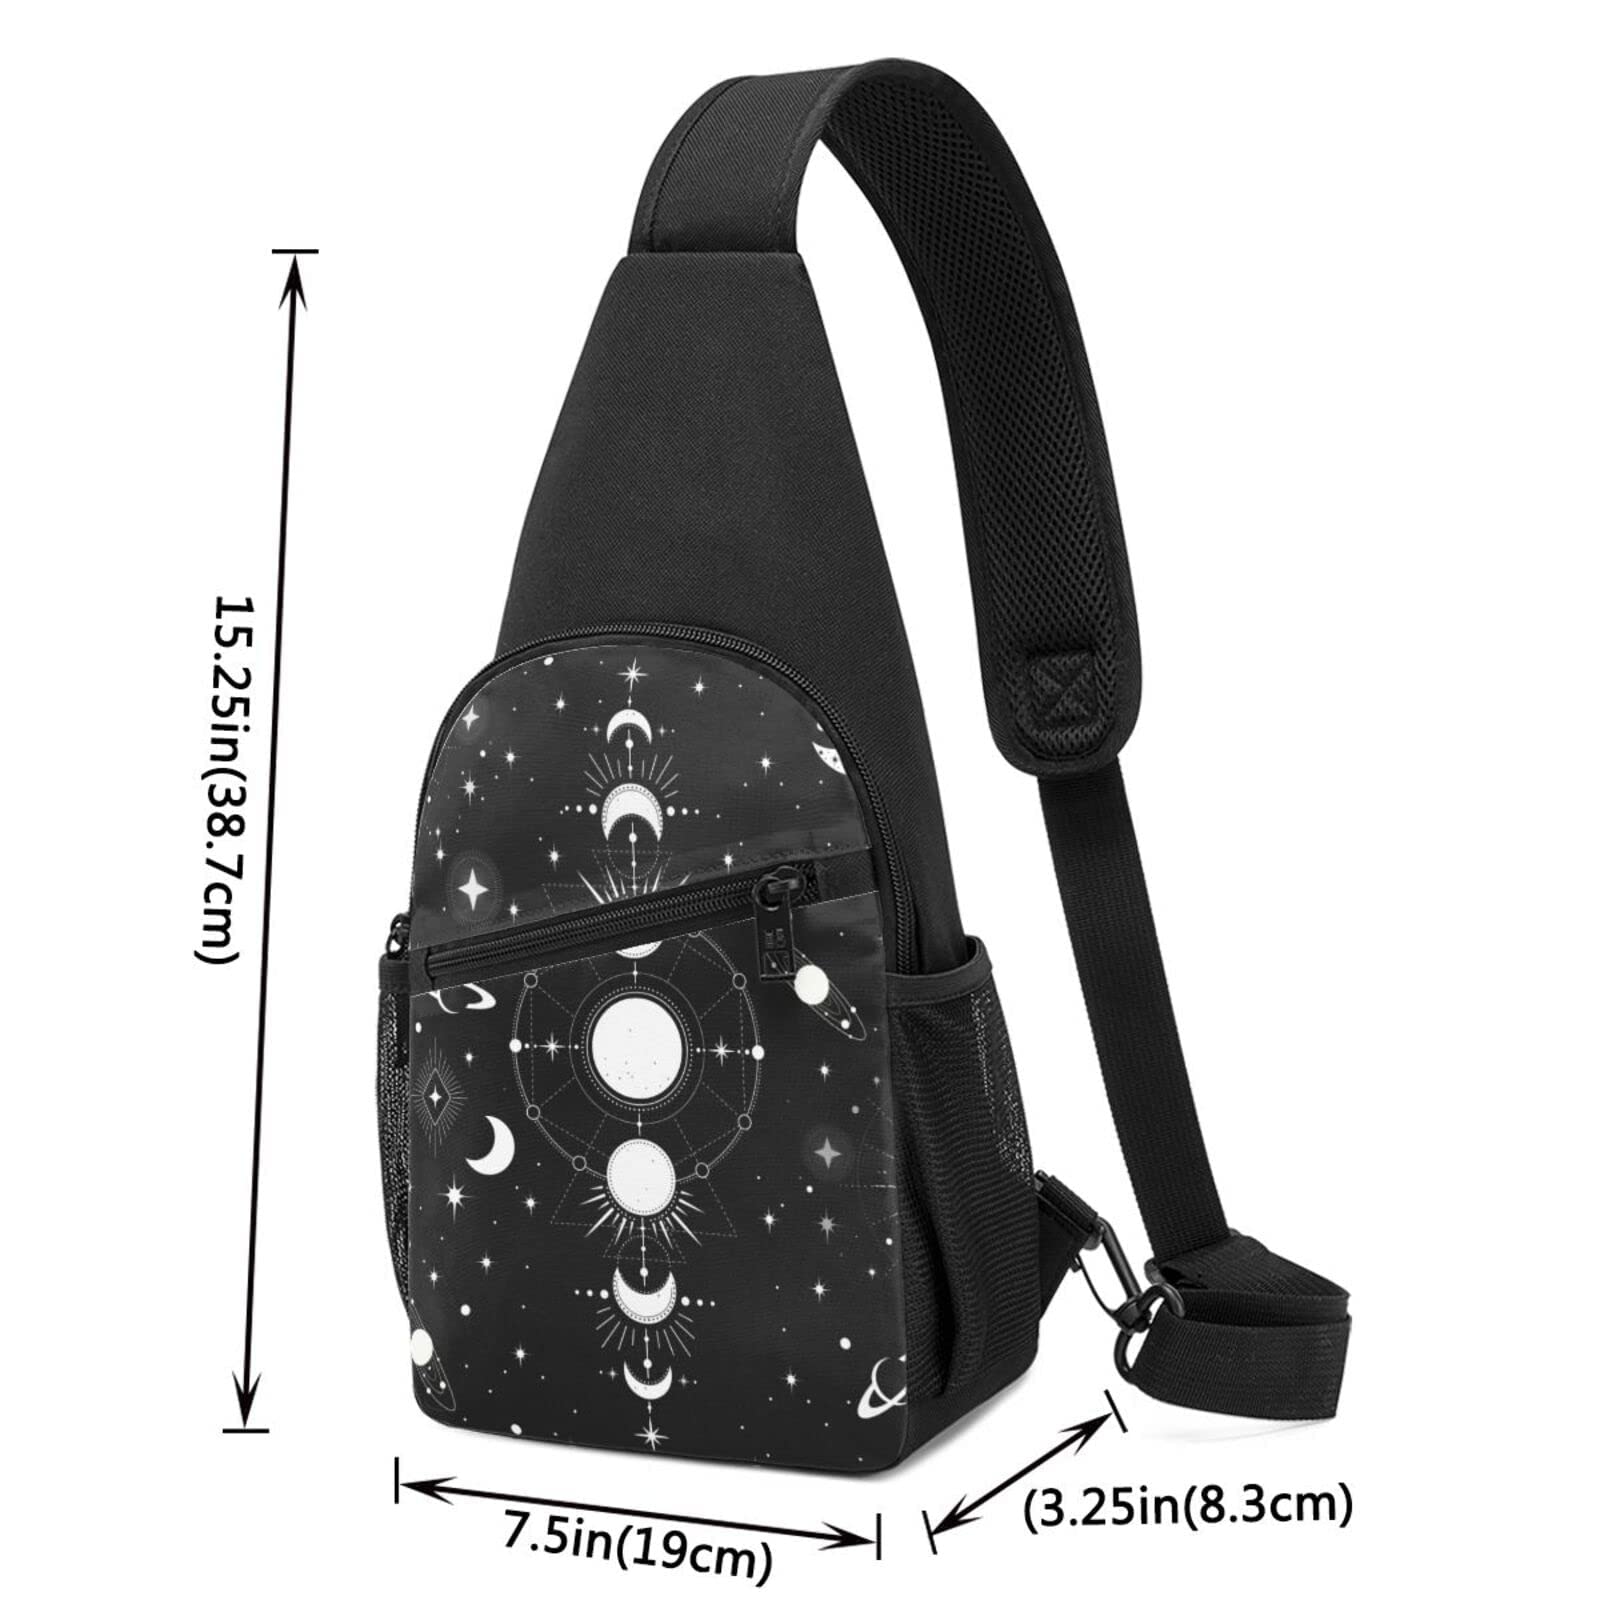 FREEHOTU Sun And Moon Mystical Astrology Sling Backpack, Travel Chest Bag Hiking Daypack Crossbody Shoulder Bag